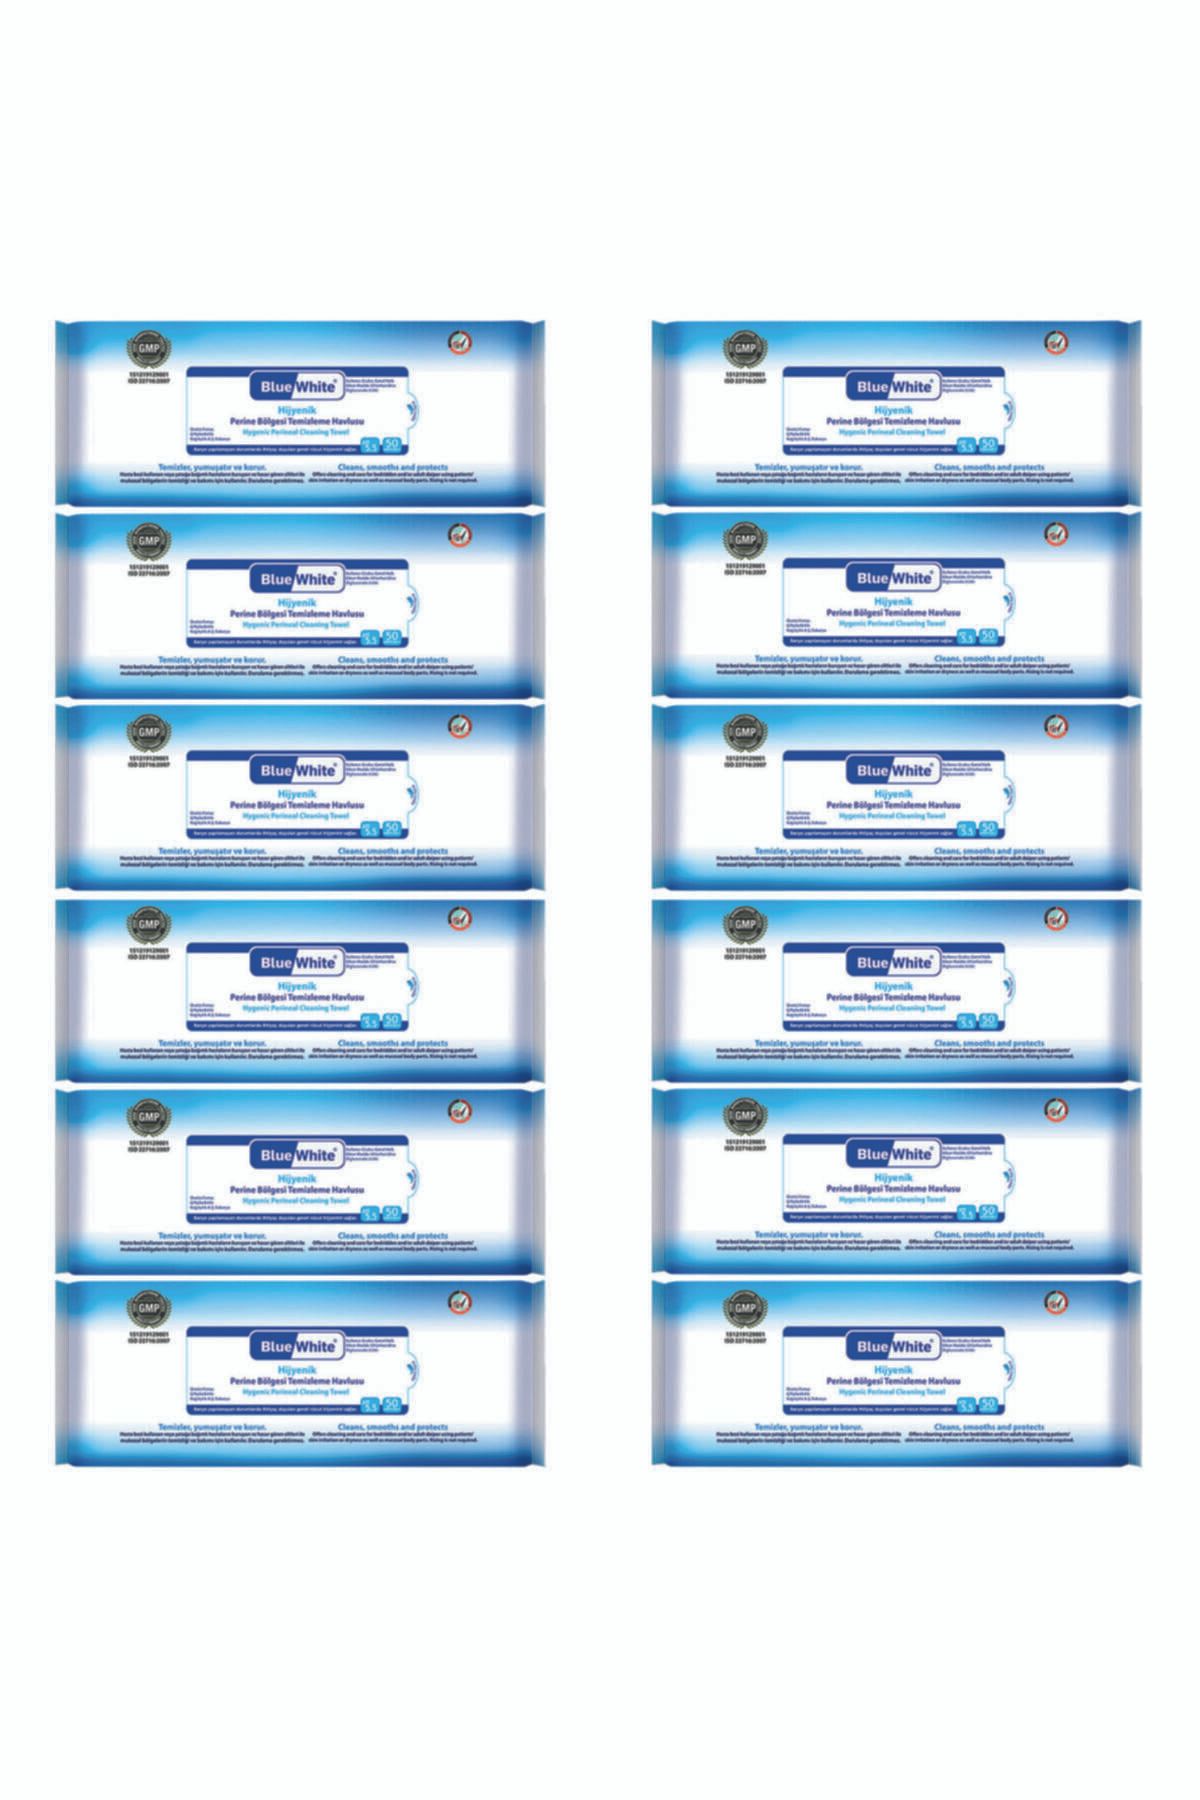 Bluewhite Antibakteriyel Perine Bölgesi Vücut Temizleme Havlusu-mendili 50 Li 12 Paket 600 Kullanım